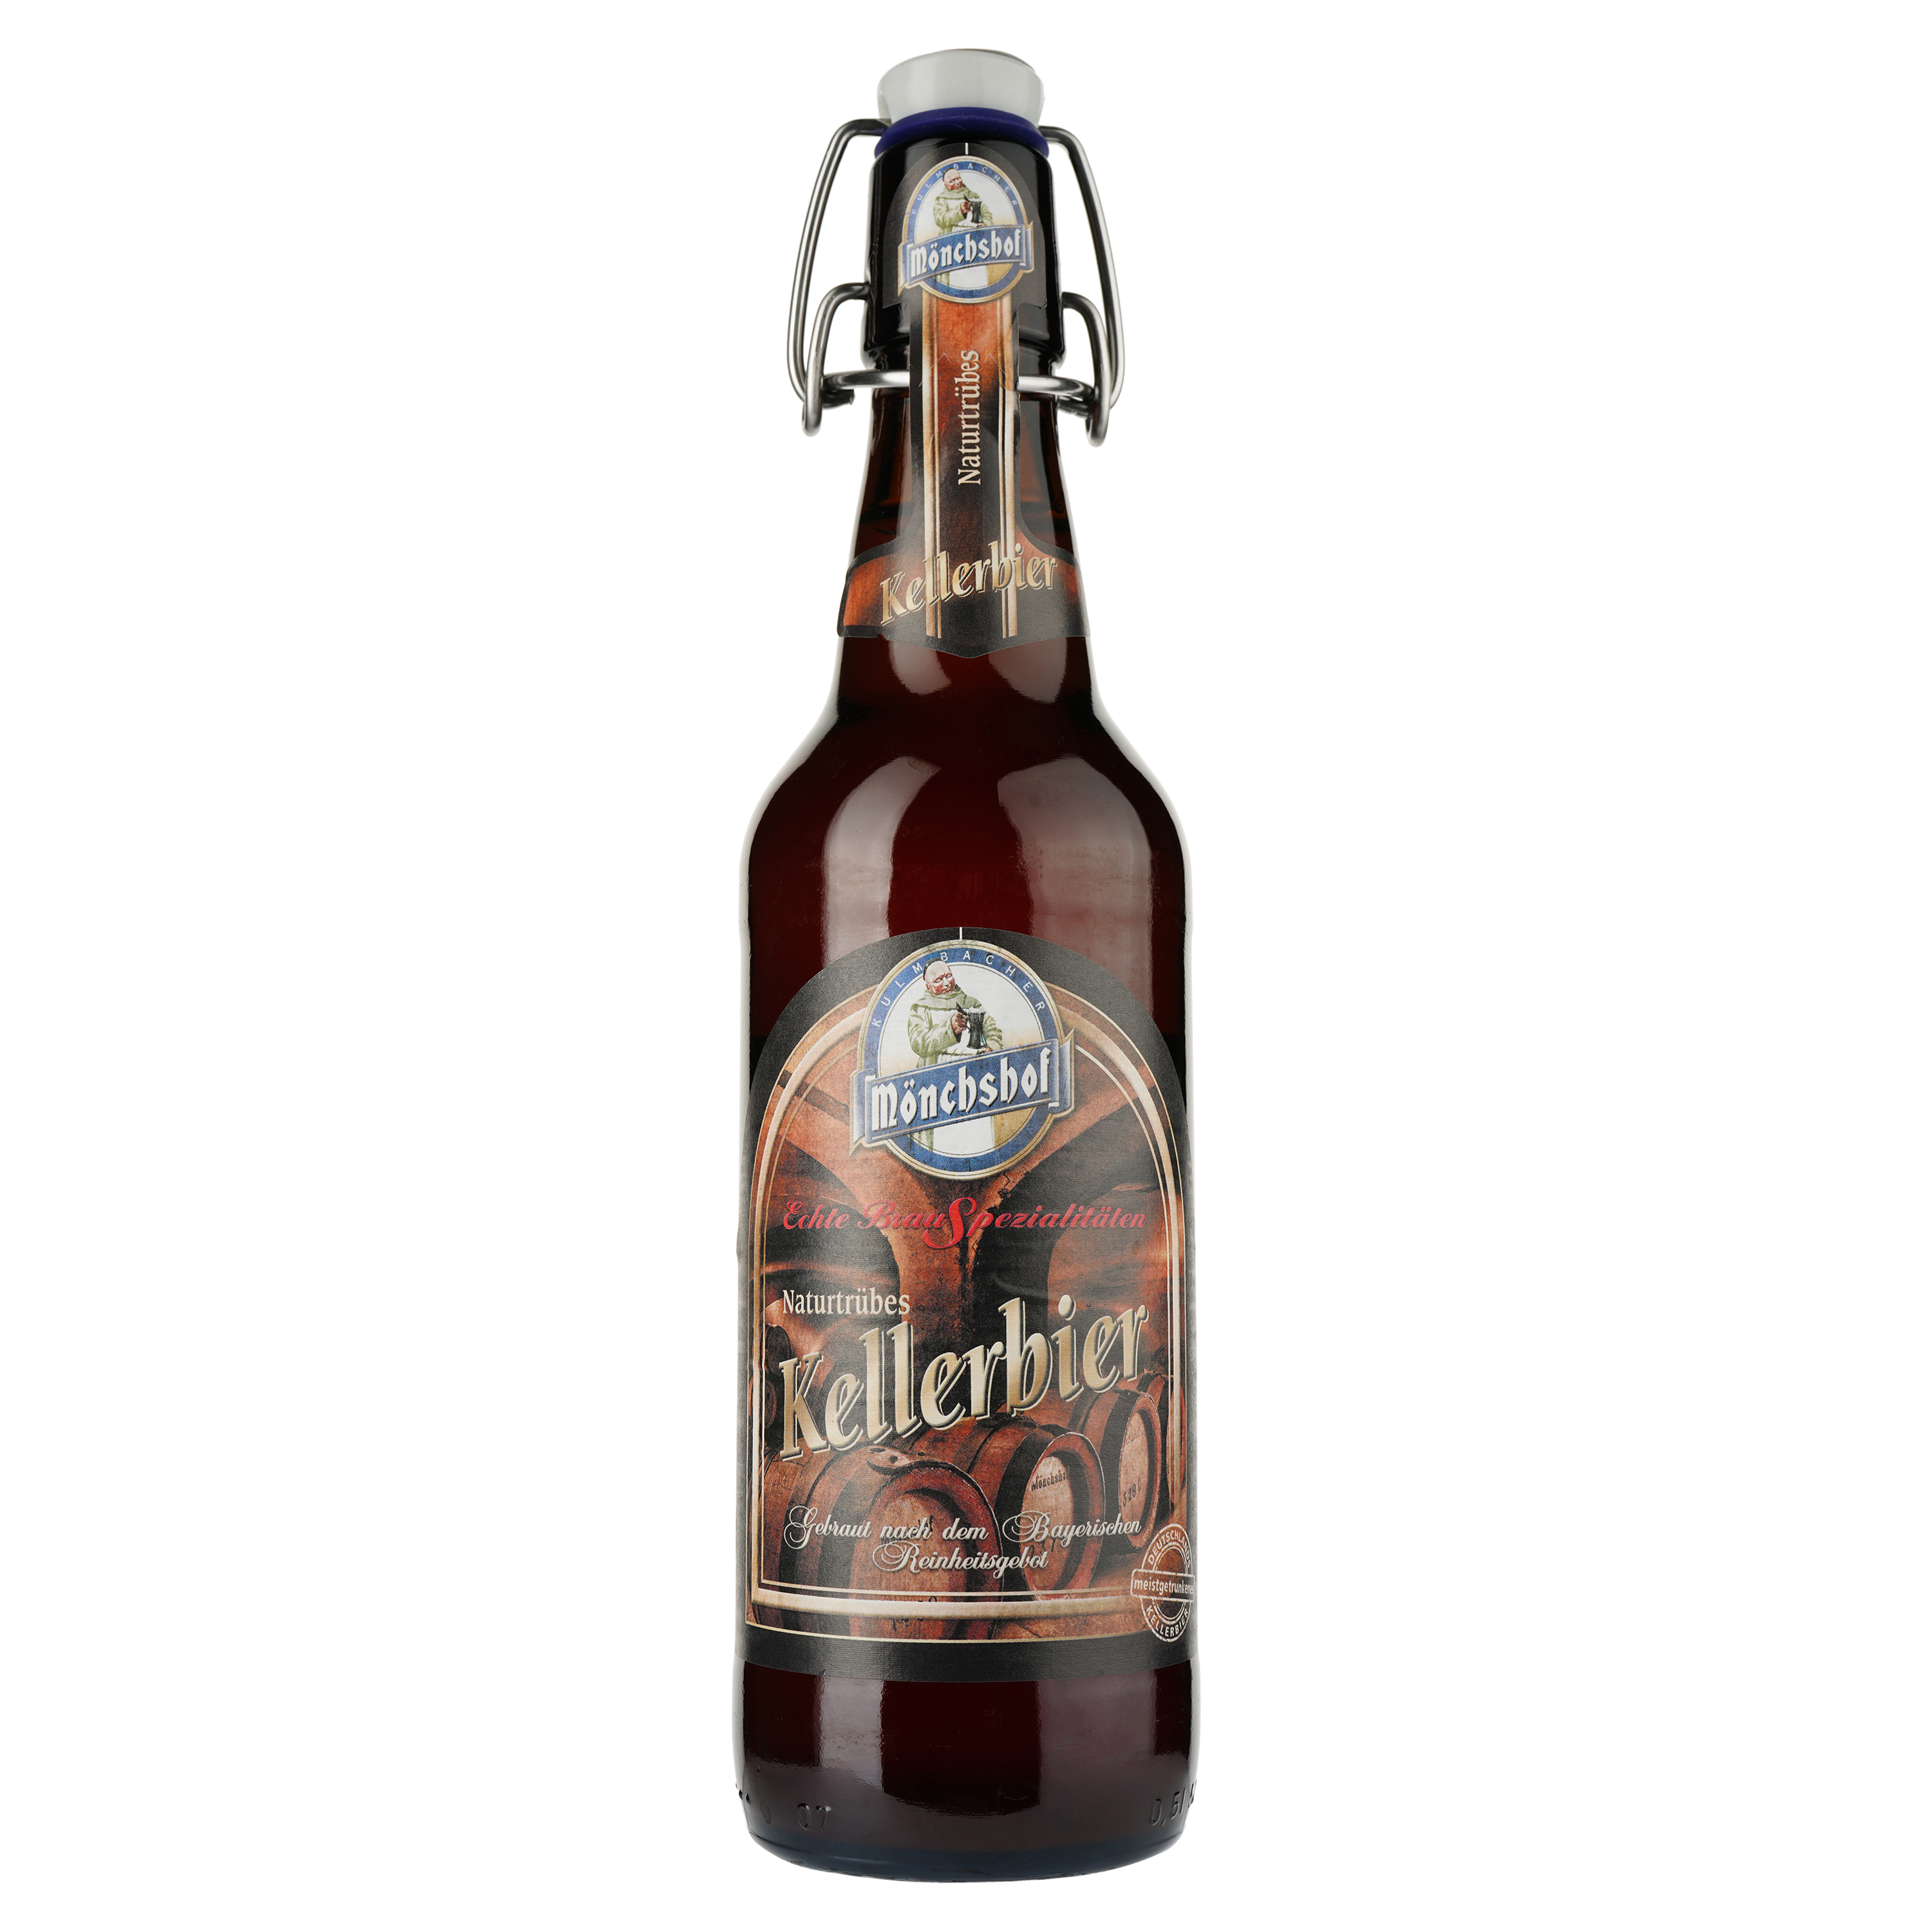 Пиво Monchshof Kellerbier светлое, 5.4%, 0.5 л - фото 1